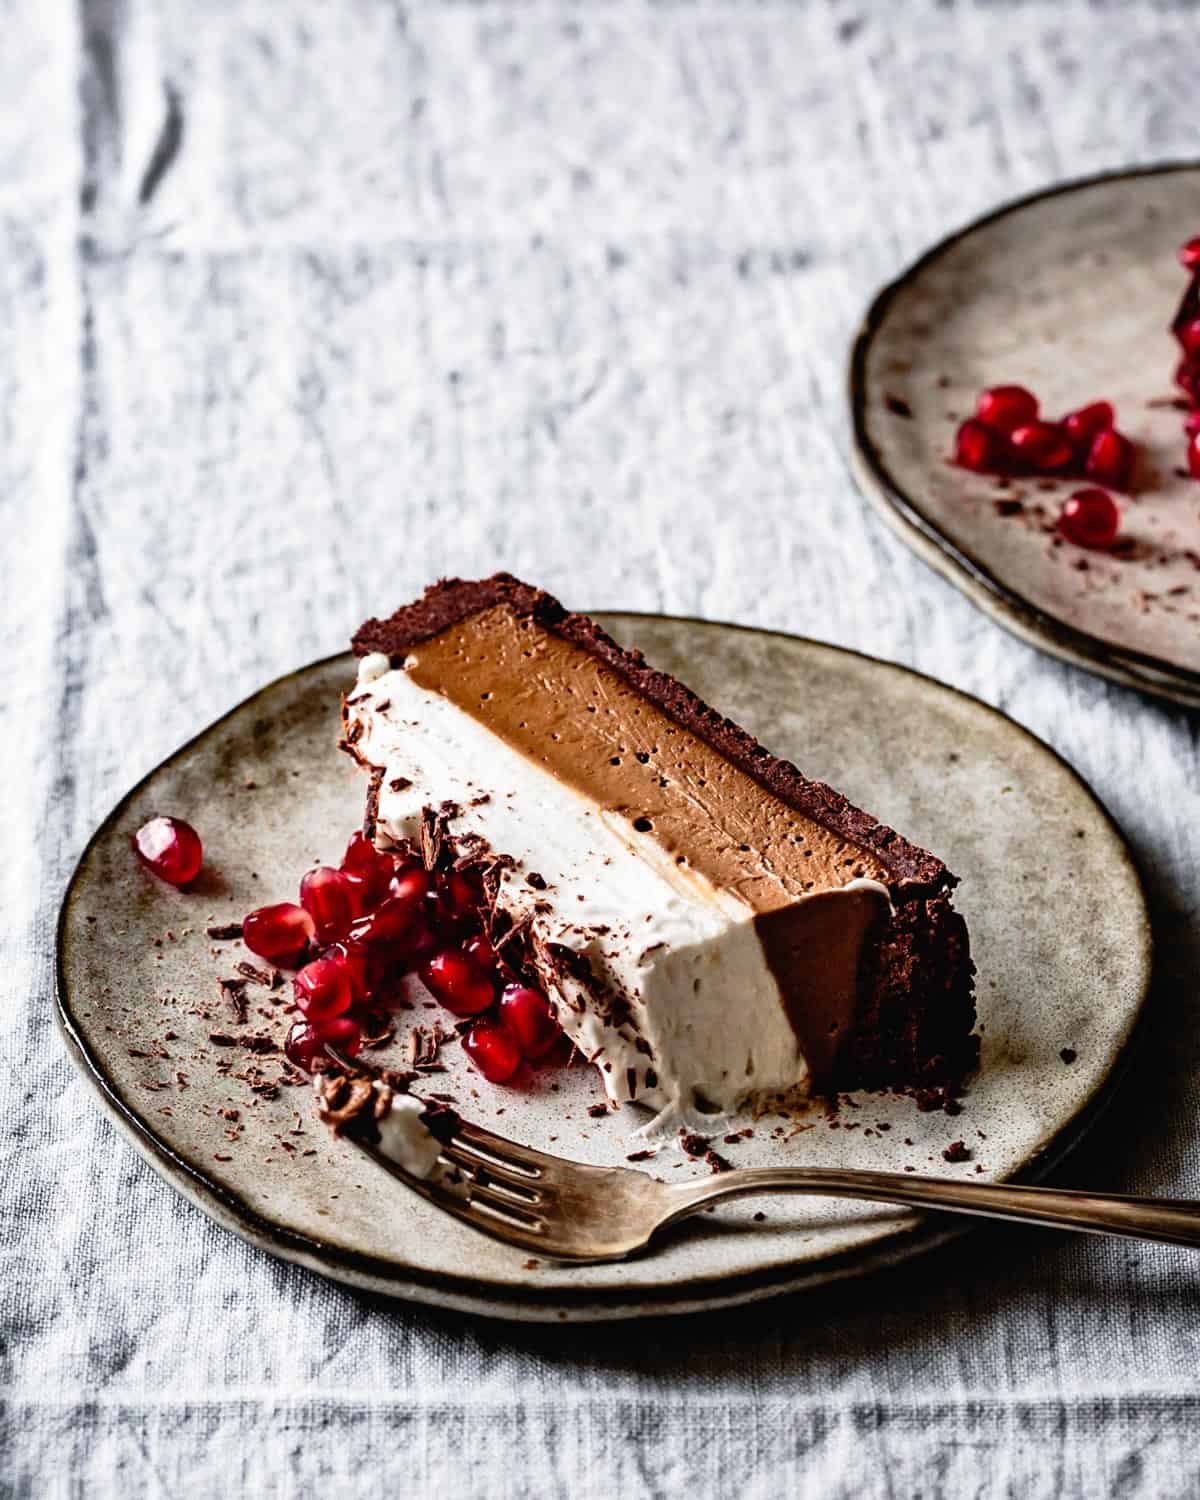 healthy chocolate desserts: GF chocolate cream pie